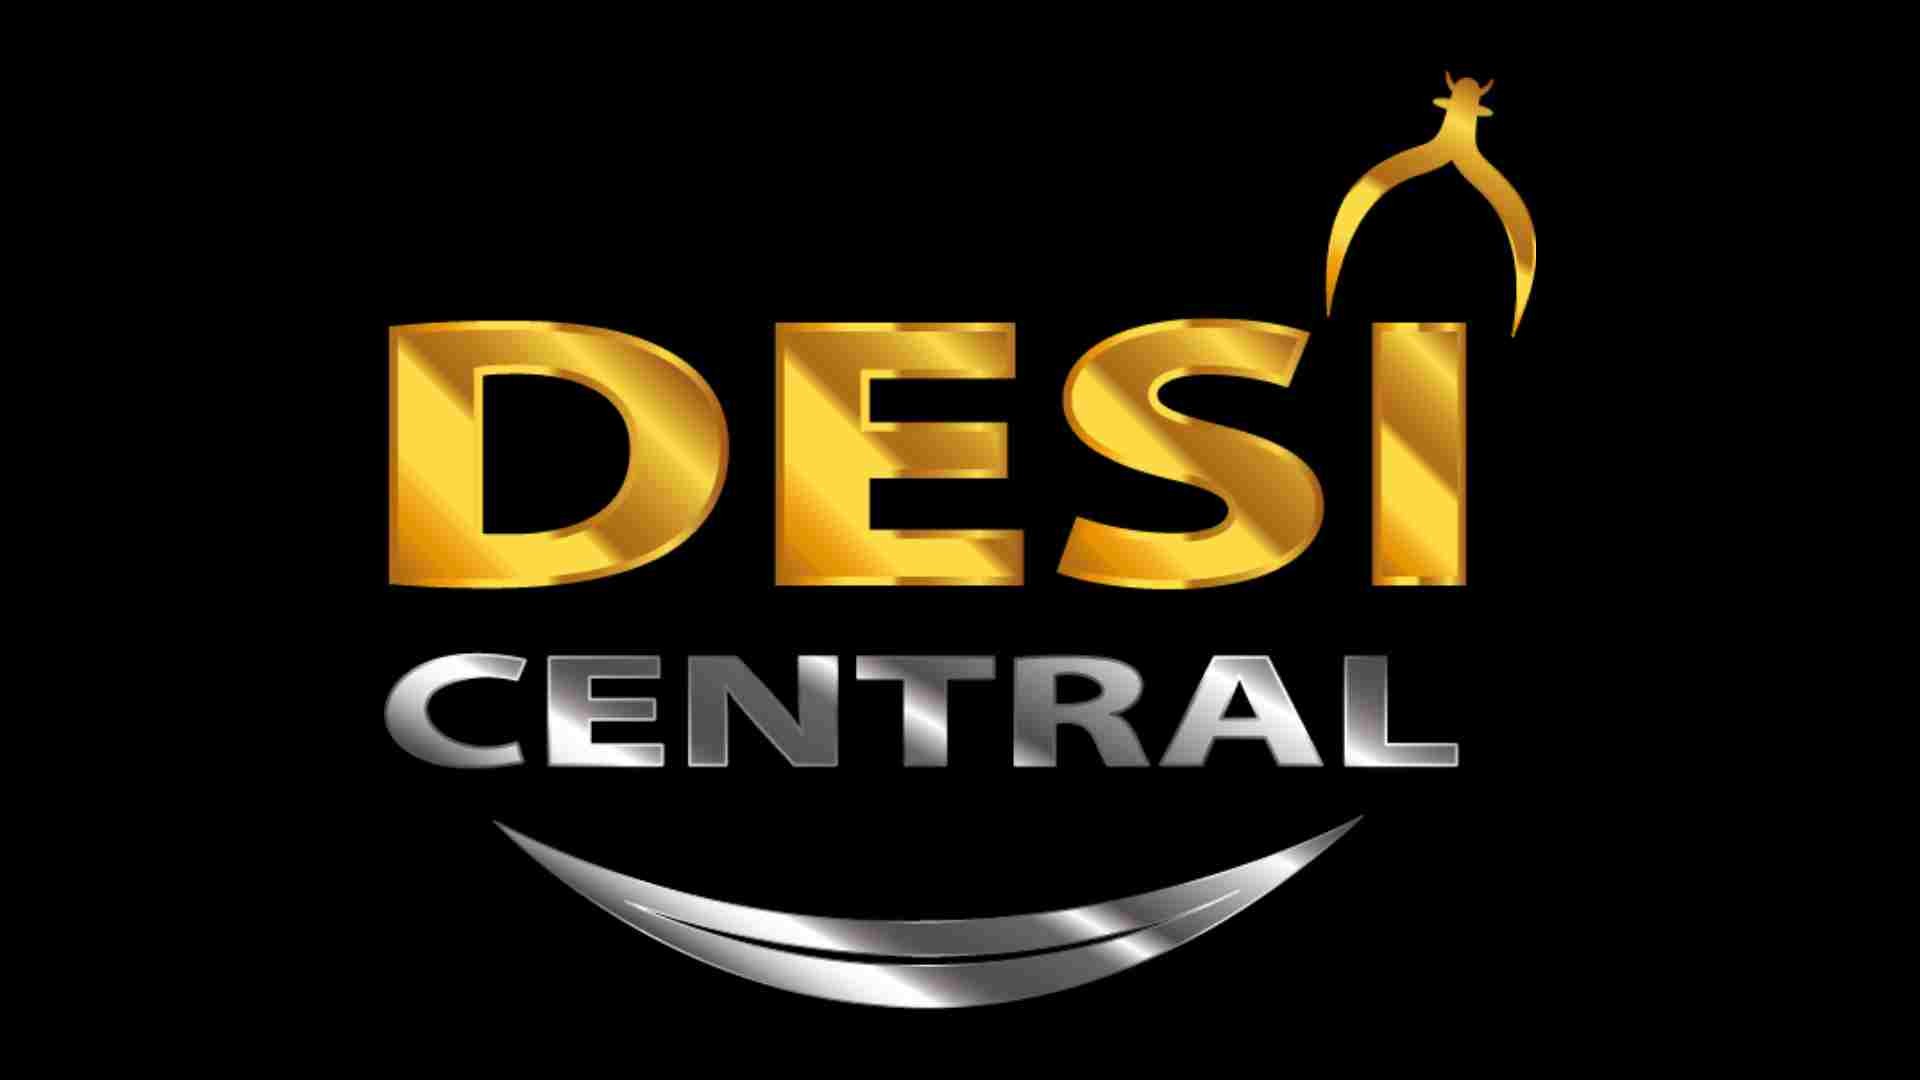 Desi Central